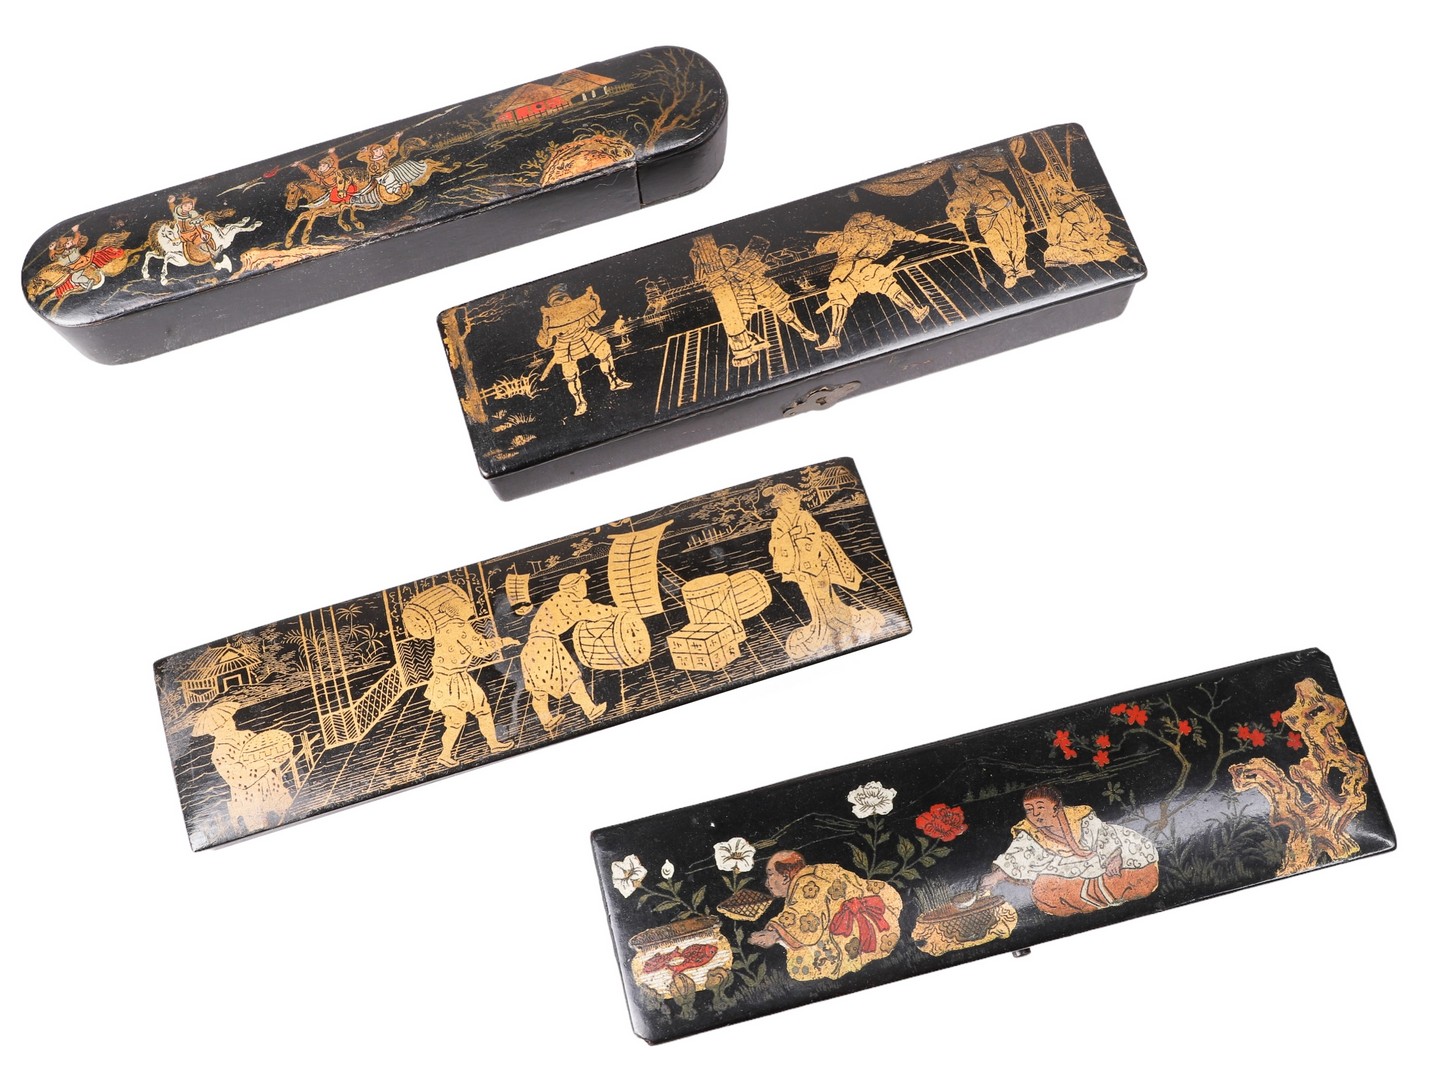  4 Japanese lacquer pen boxes  2e0aab